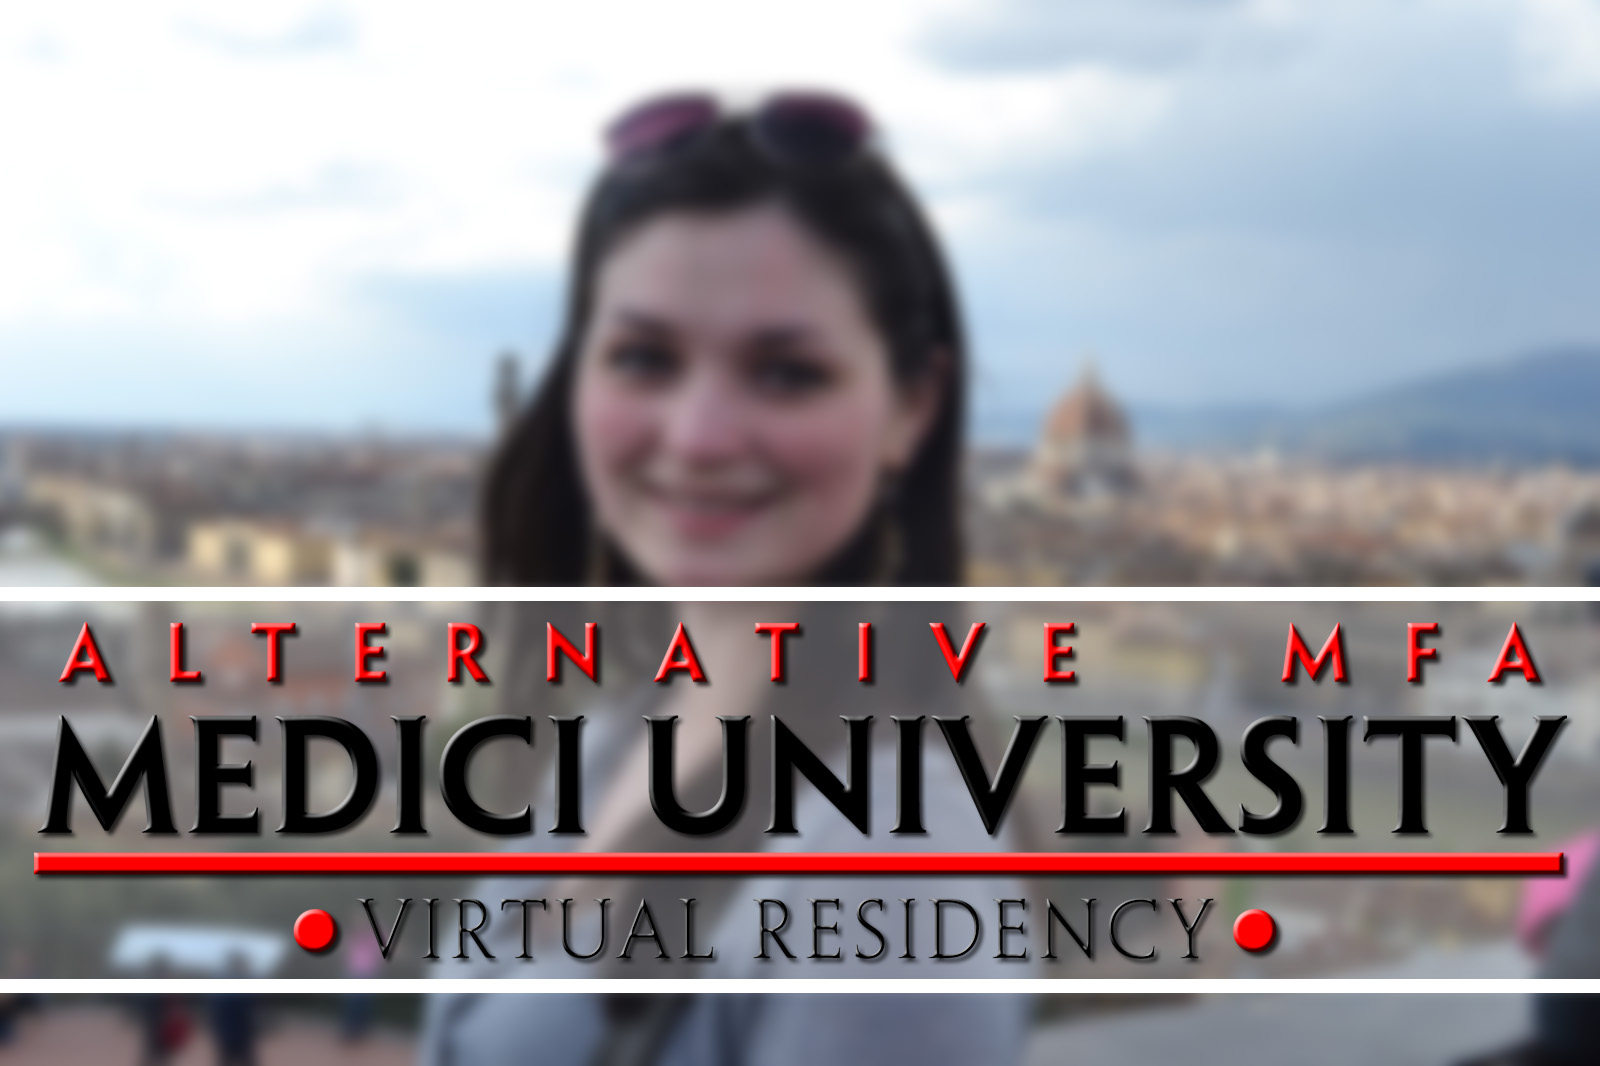 Medici University